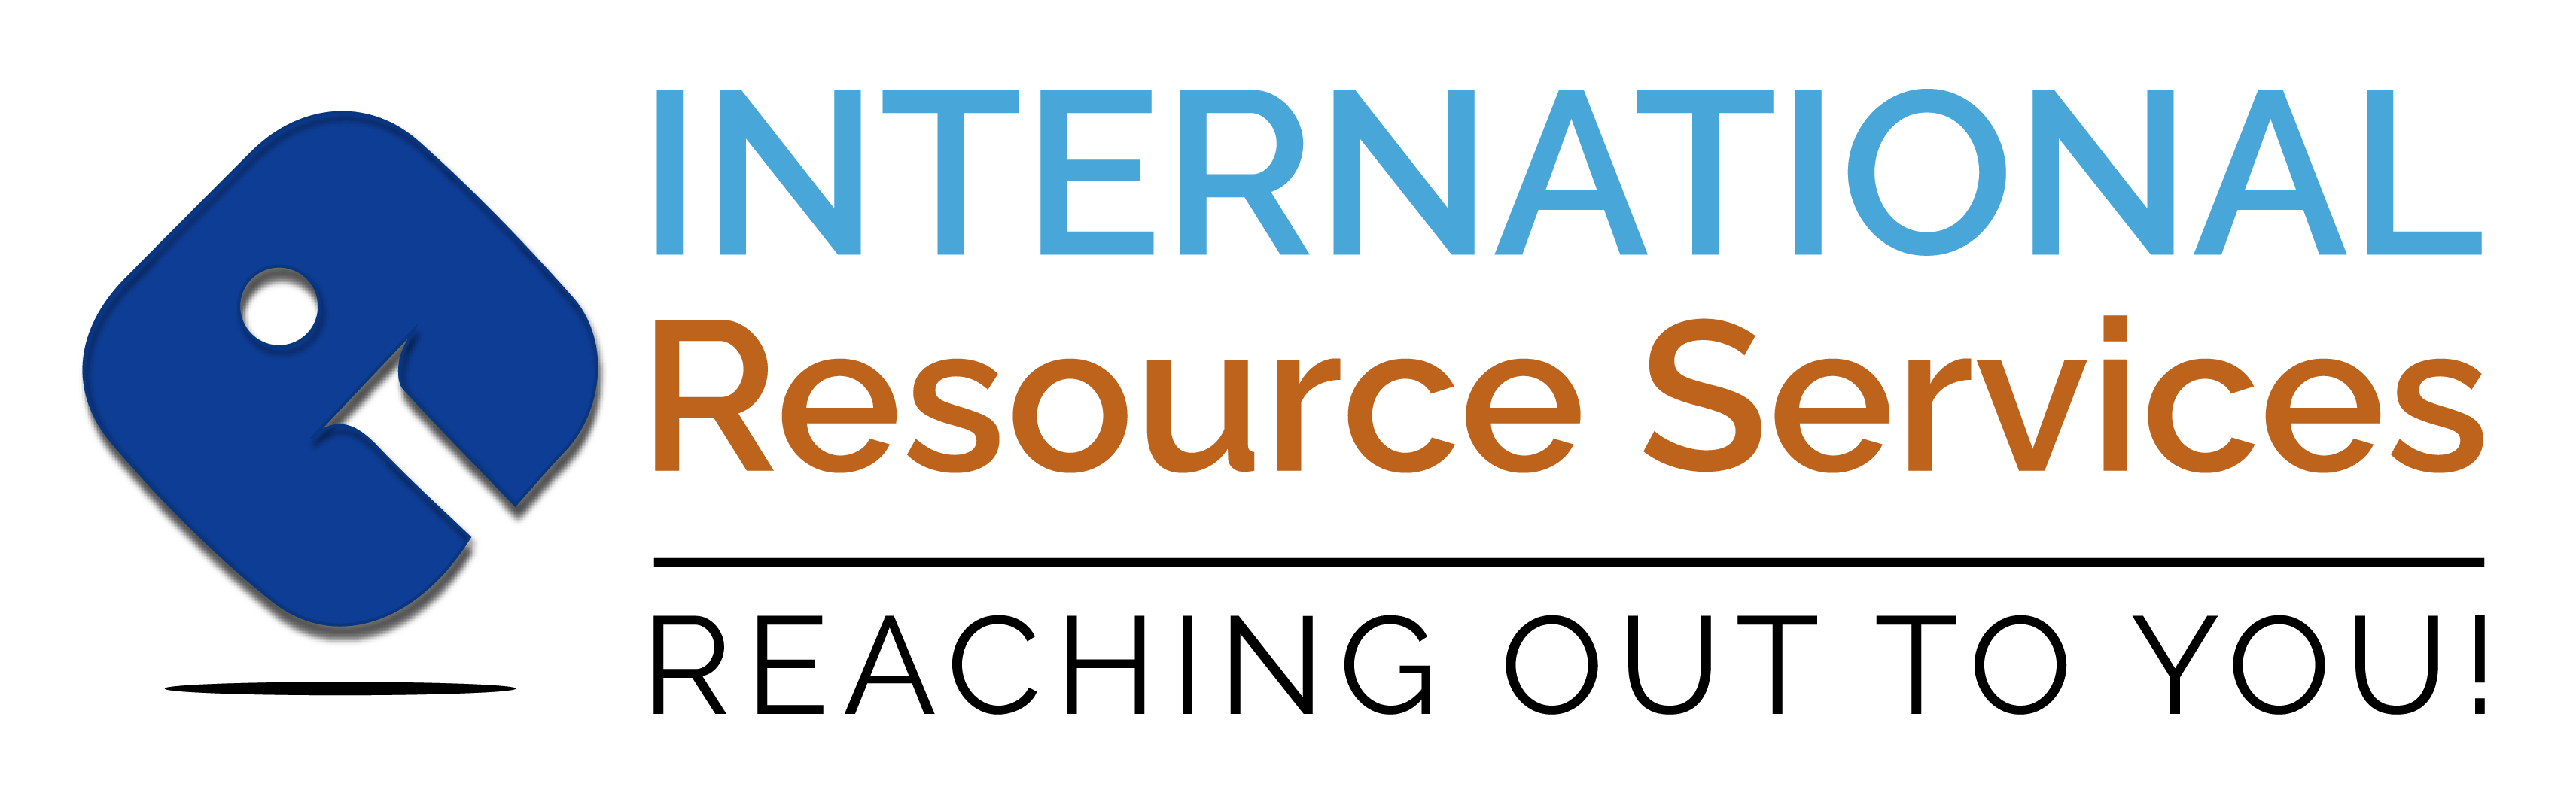 International Resource Services Logo